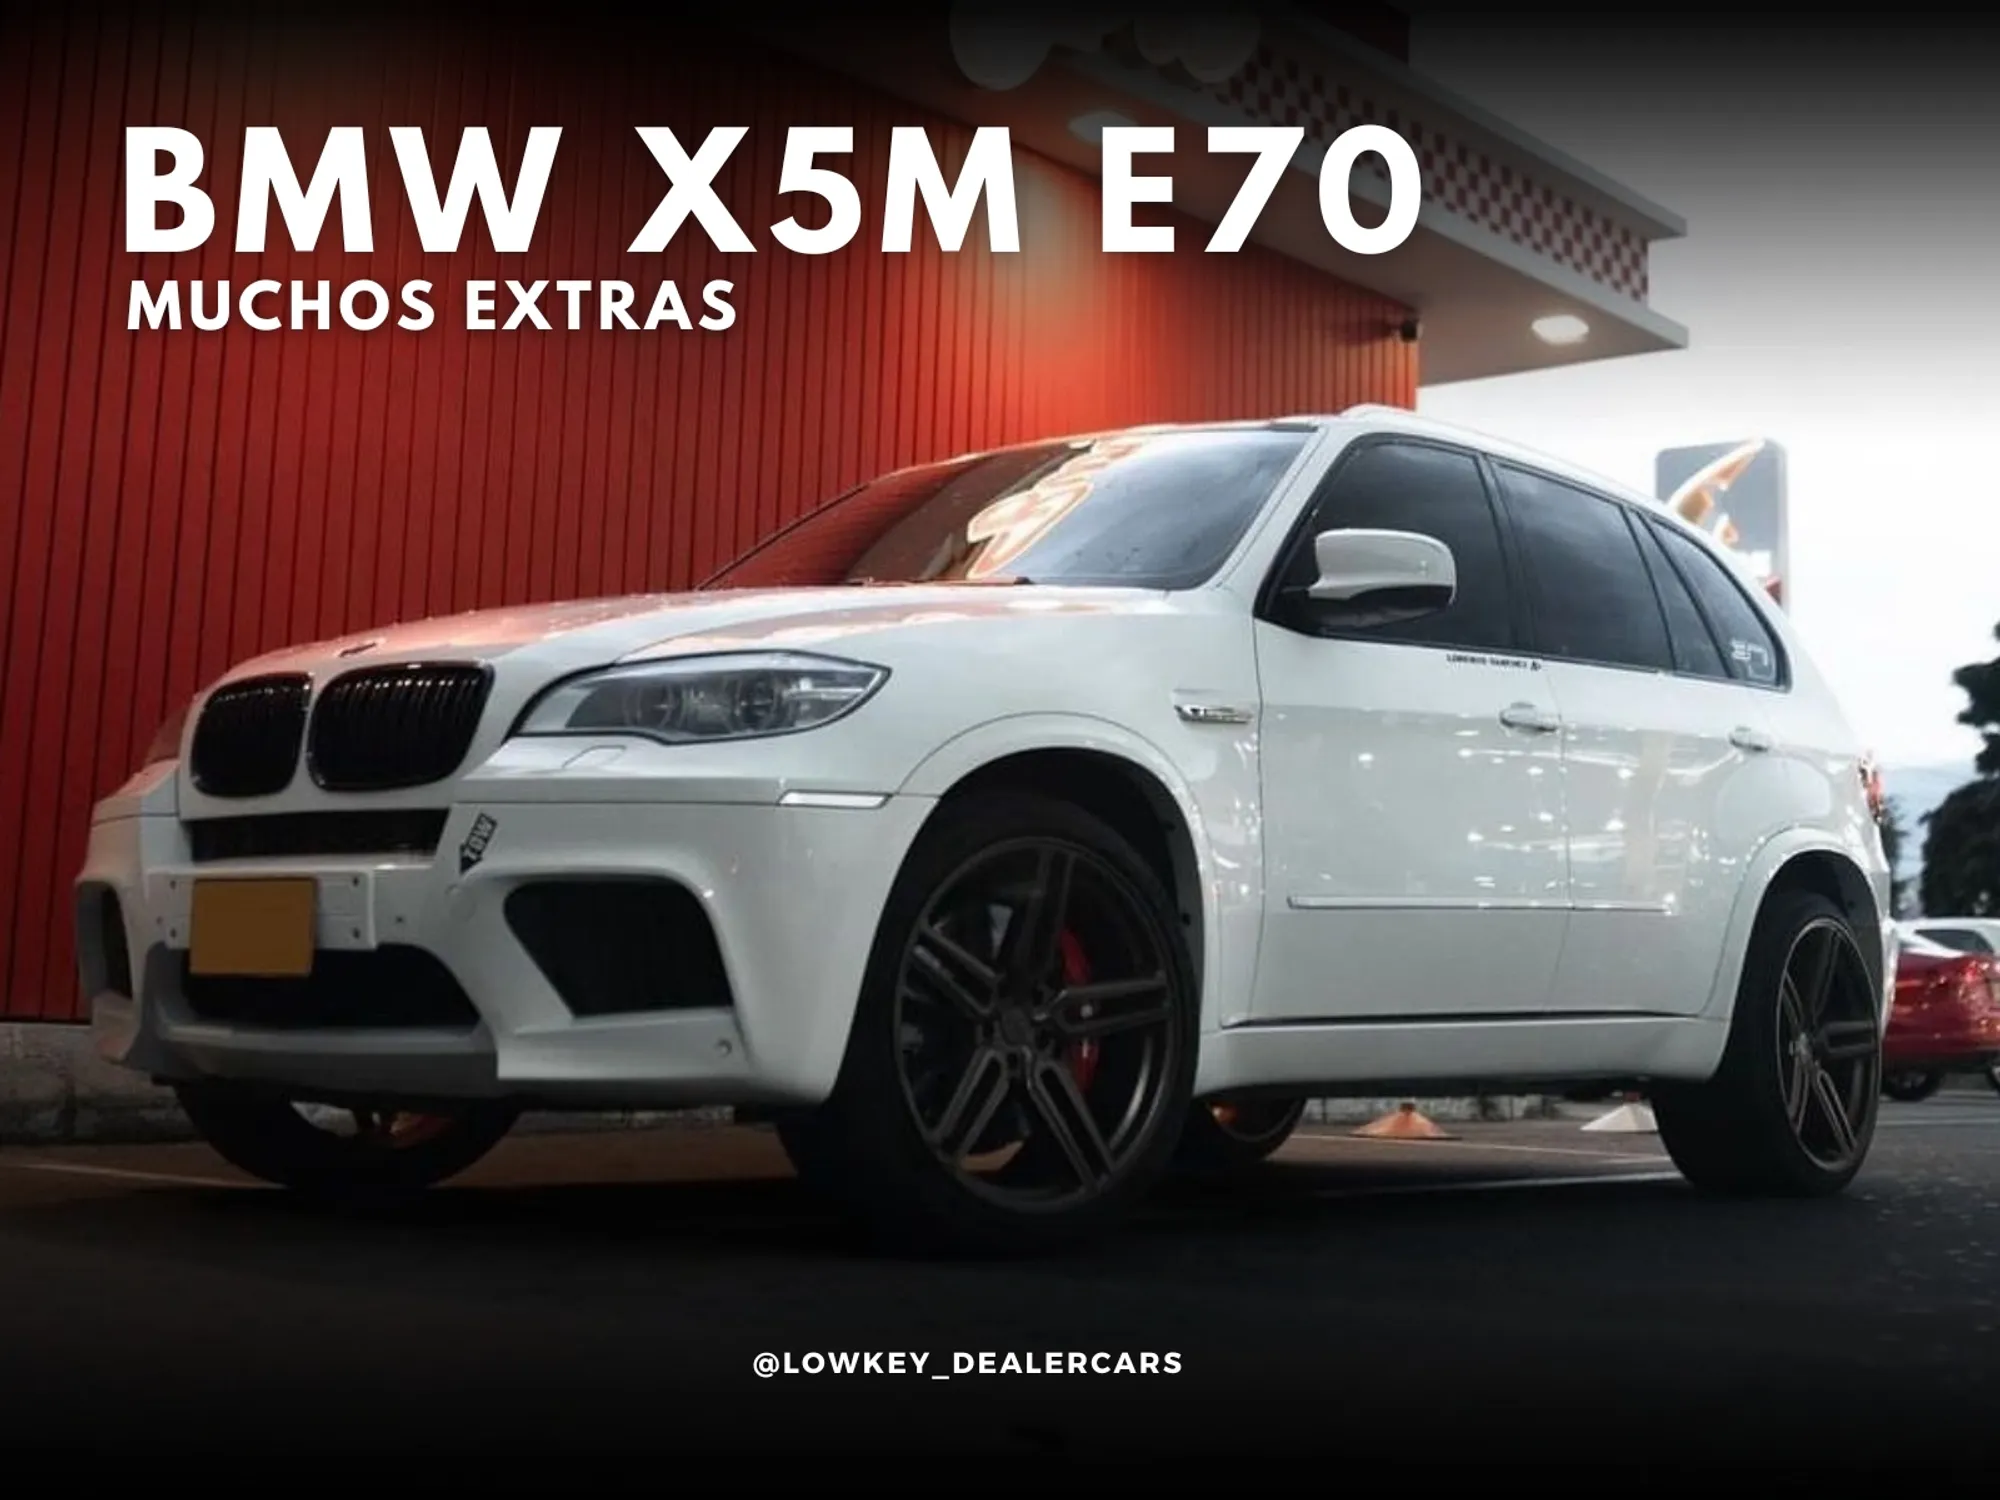 BMW X5M E70 2013